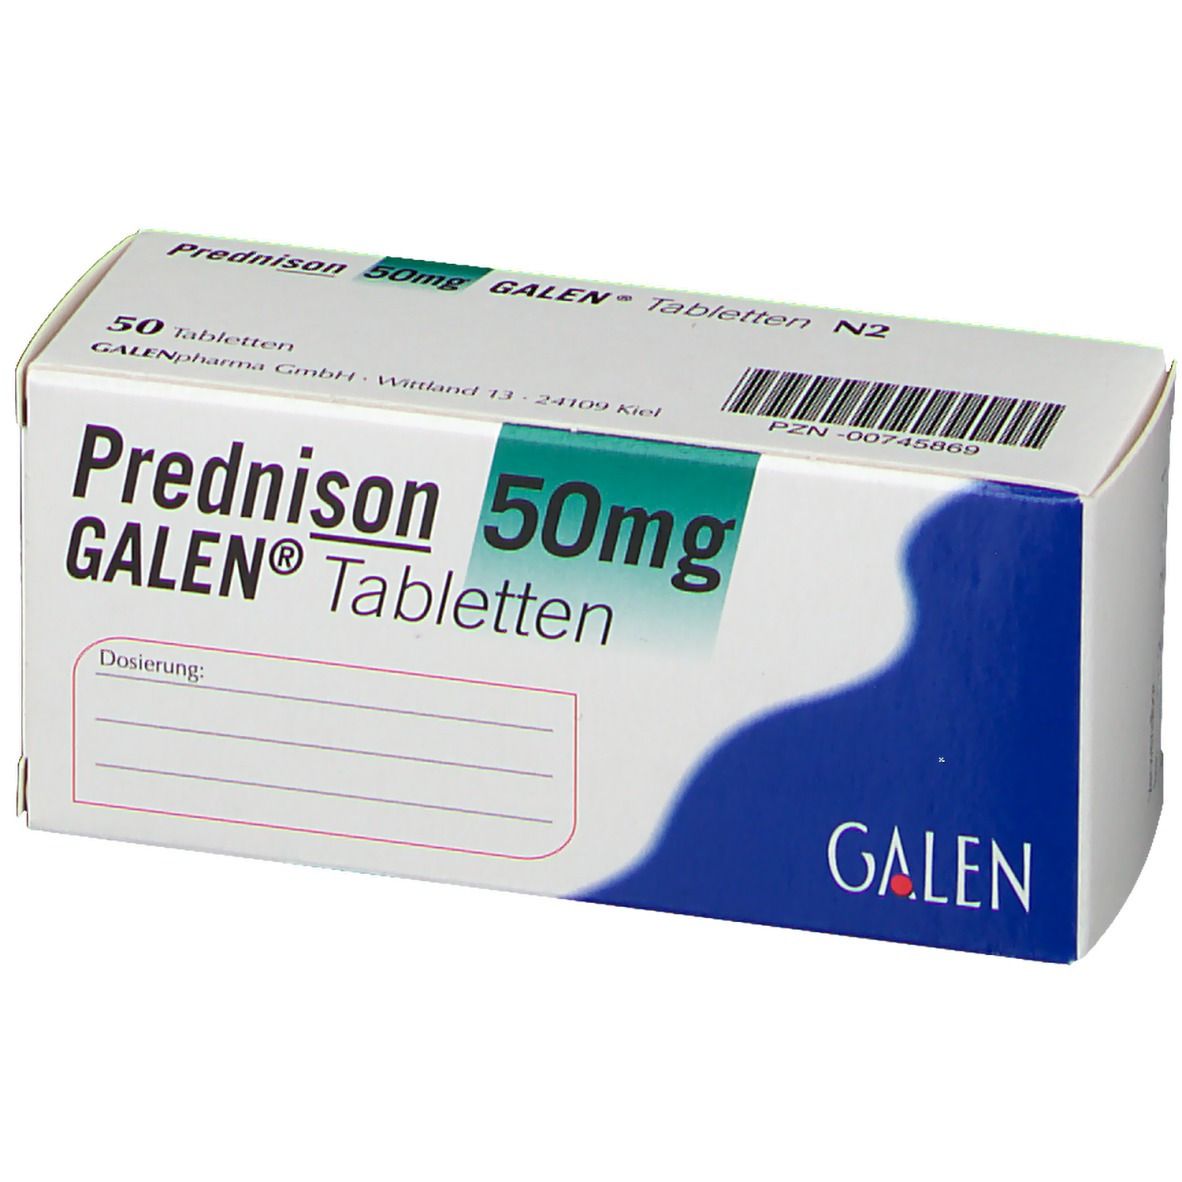 Prednison 50 mg GALEN®